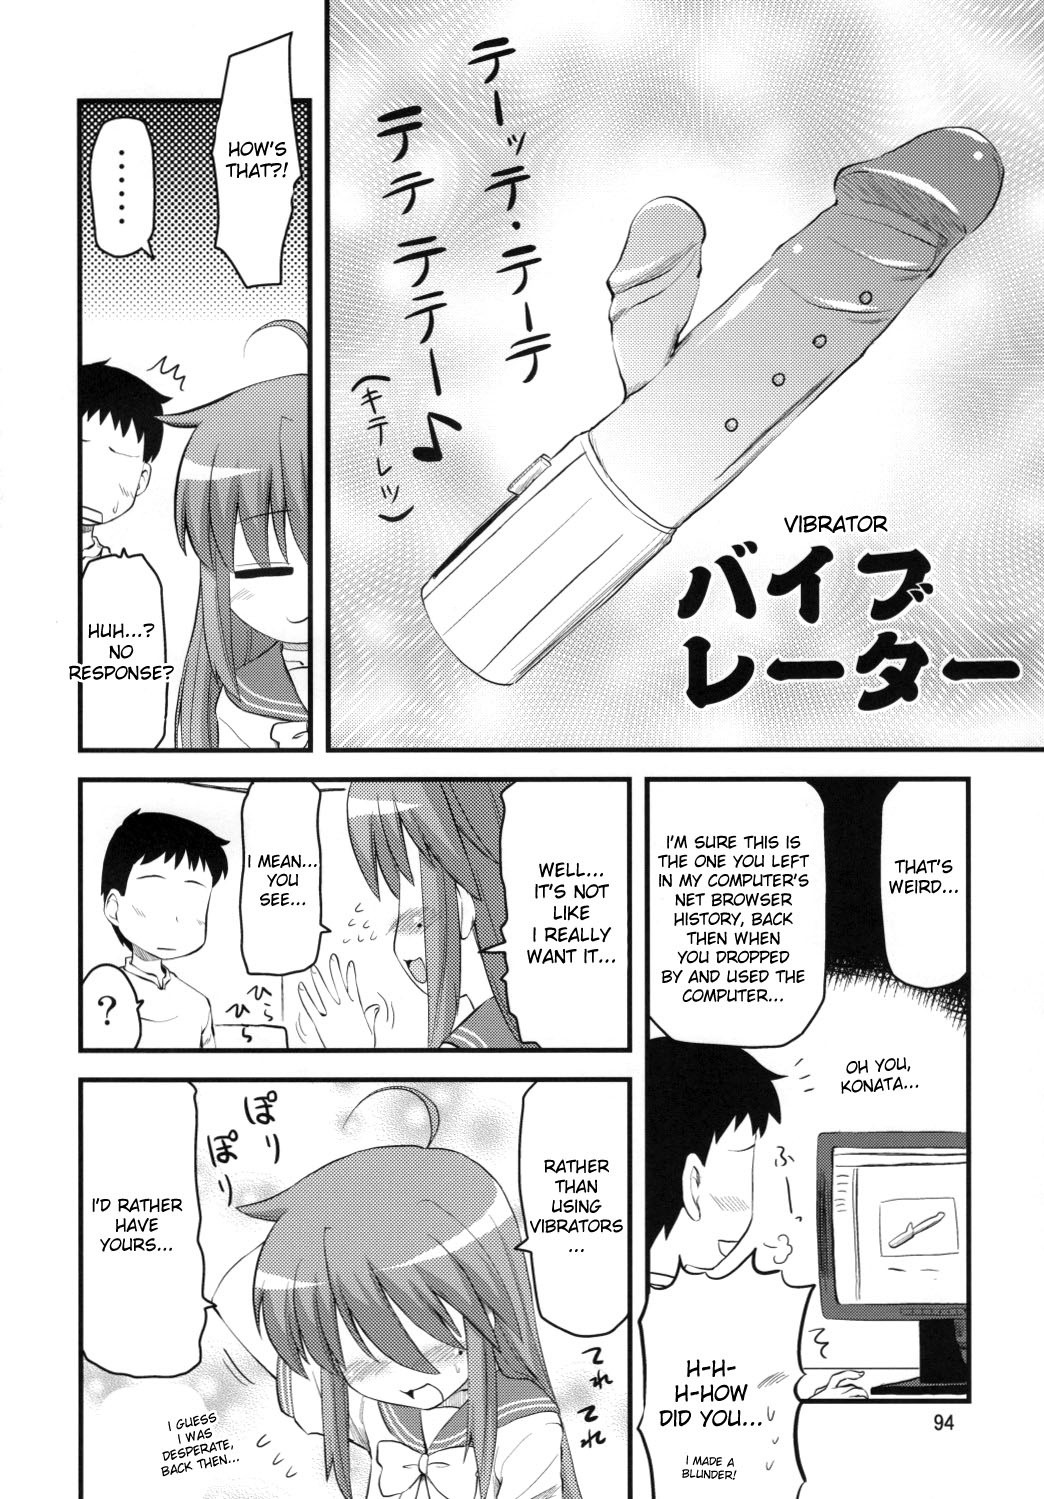 Konata and Oh-zu 4 people each and every one + 1 hentai manga picture 74